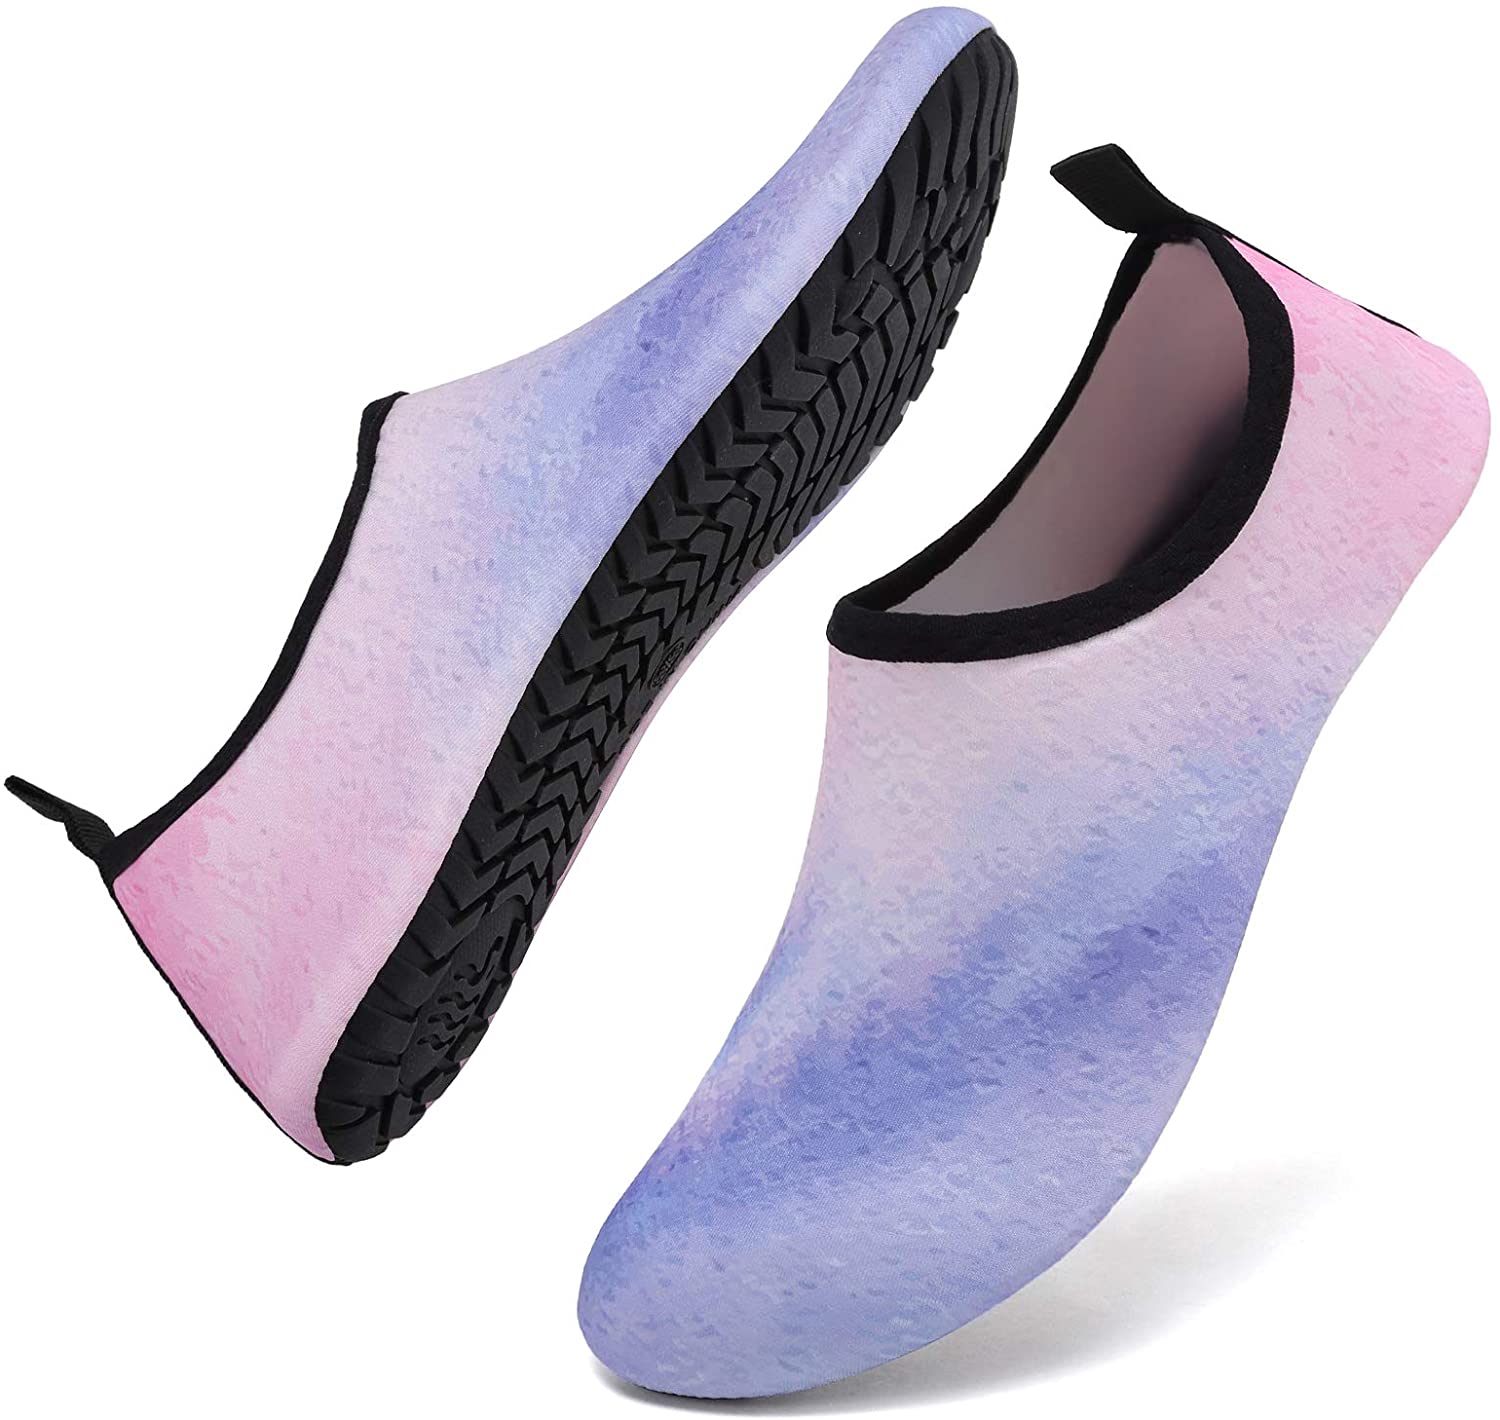 IceUnicorn Water Shoes Quick Dry Swim Aqua Barefoot Socks for Women Men 